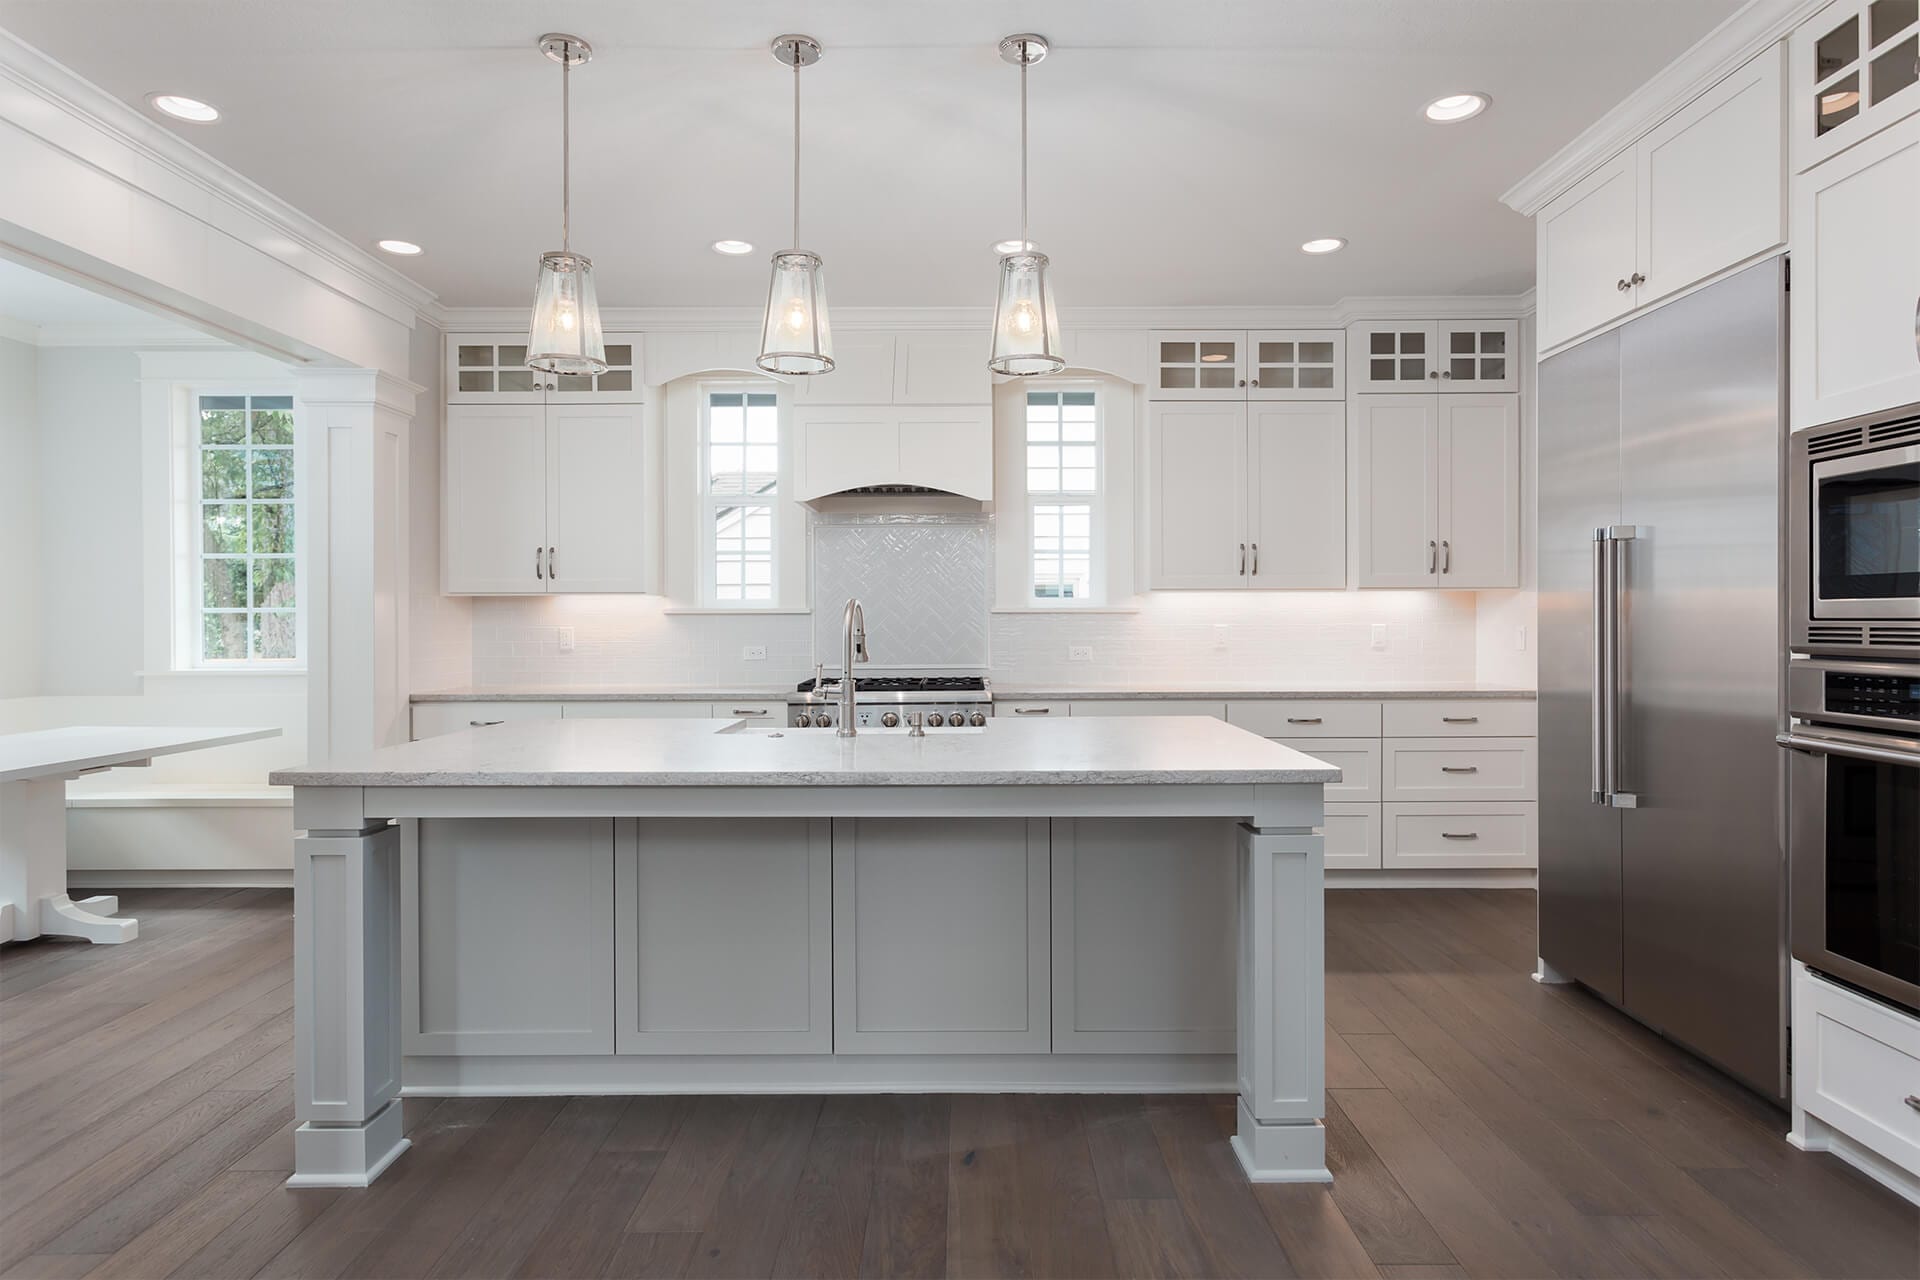 A beautifully designed modern kitchen interior